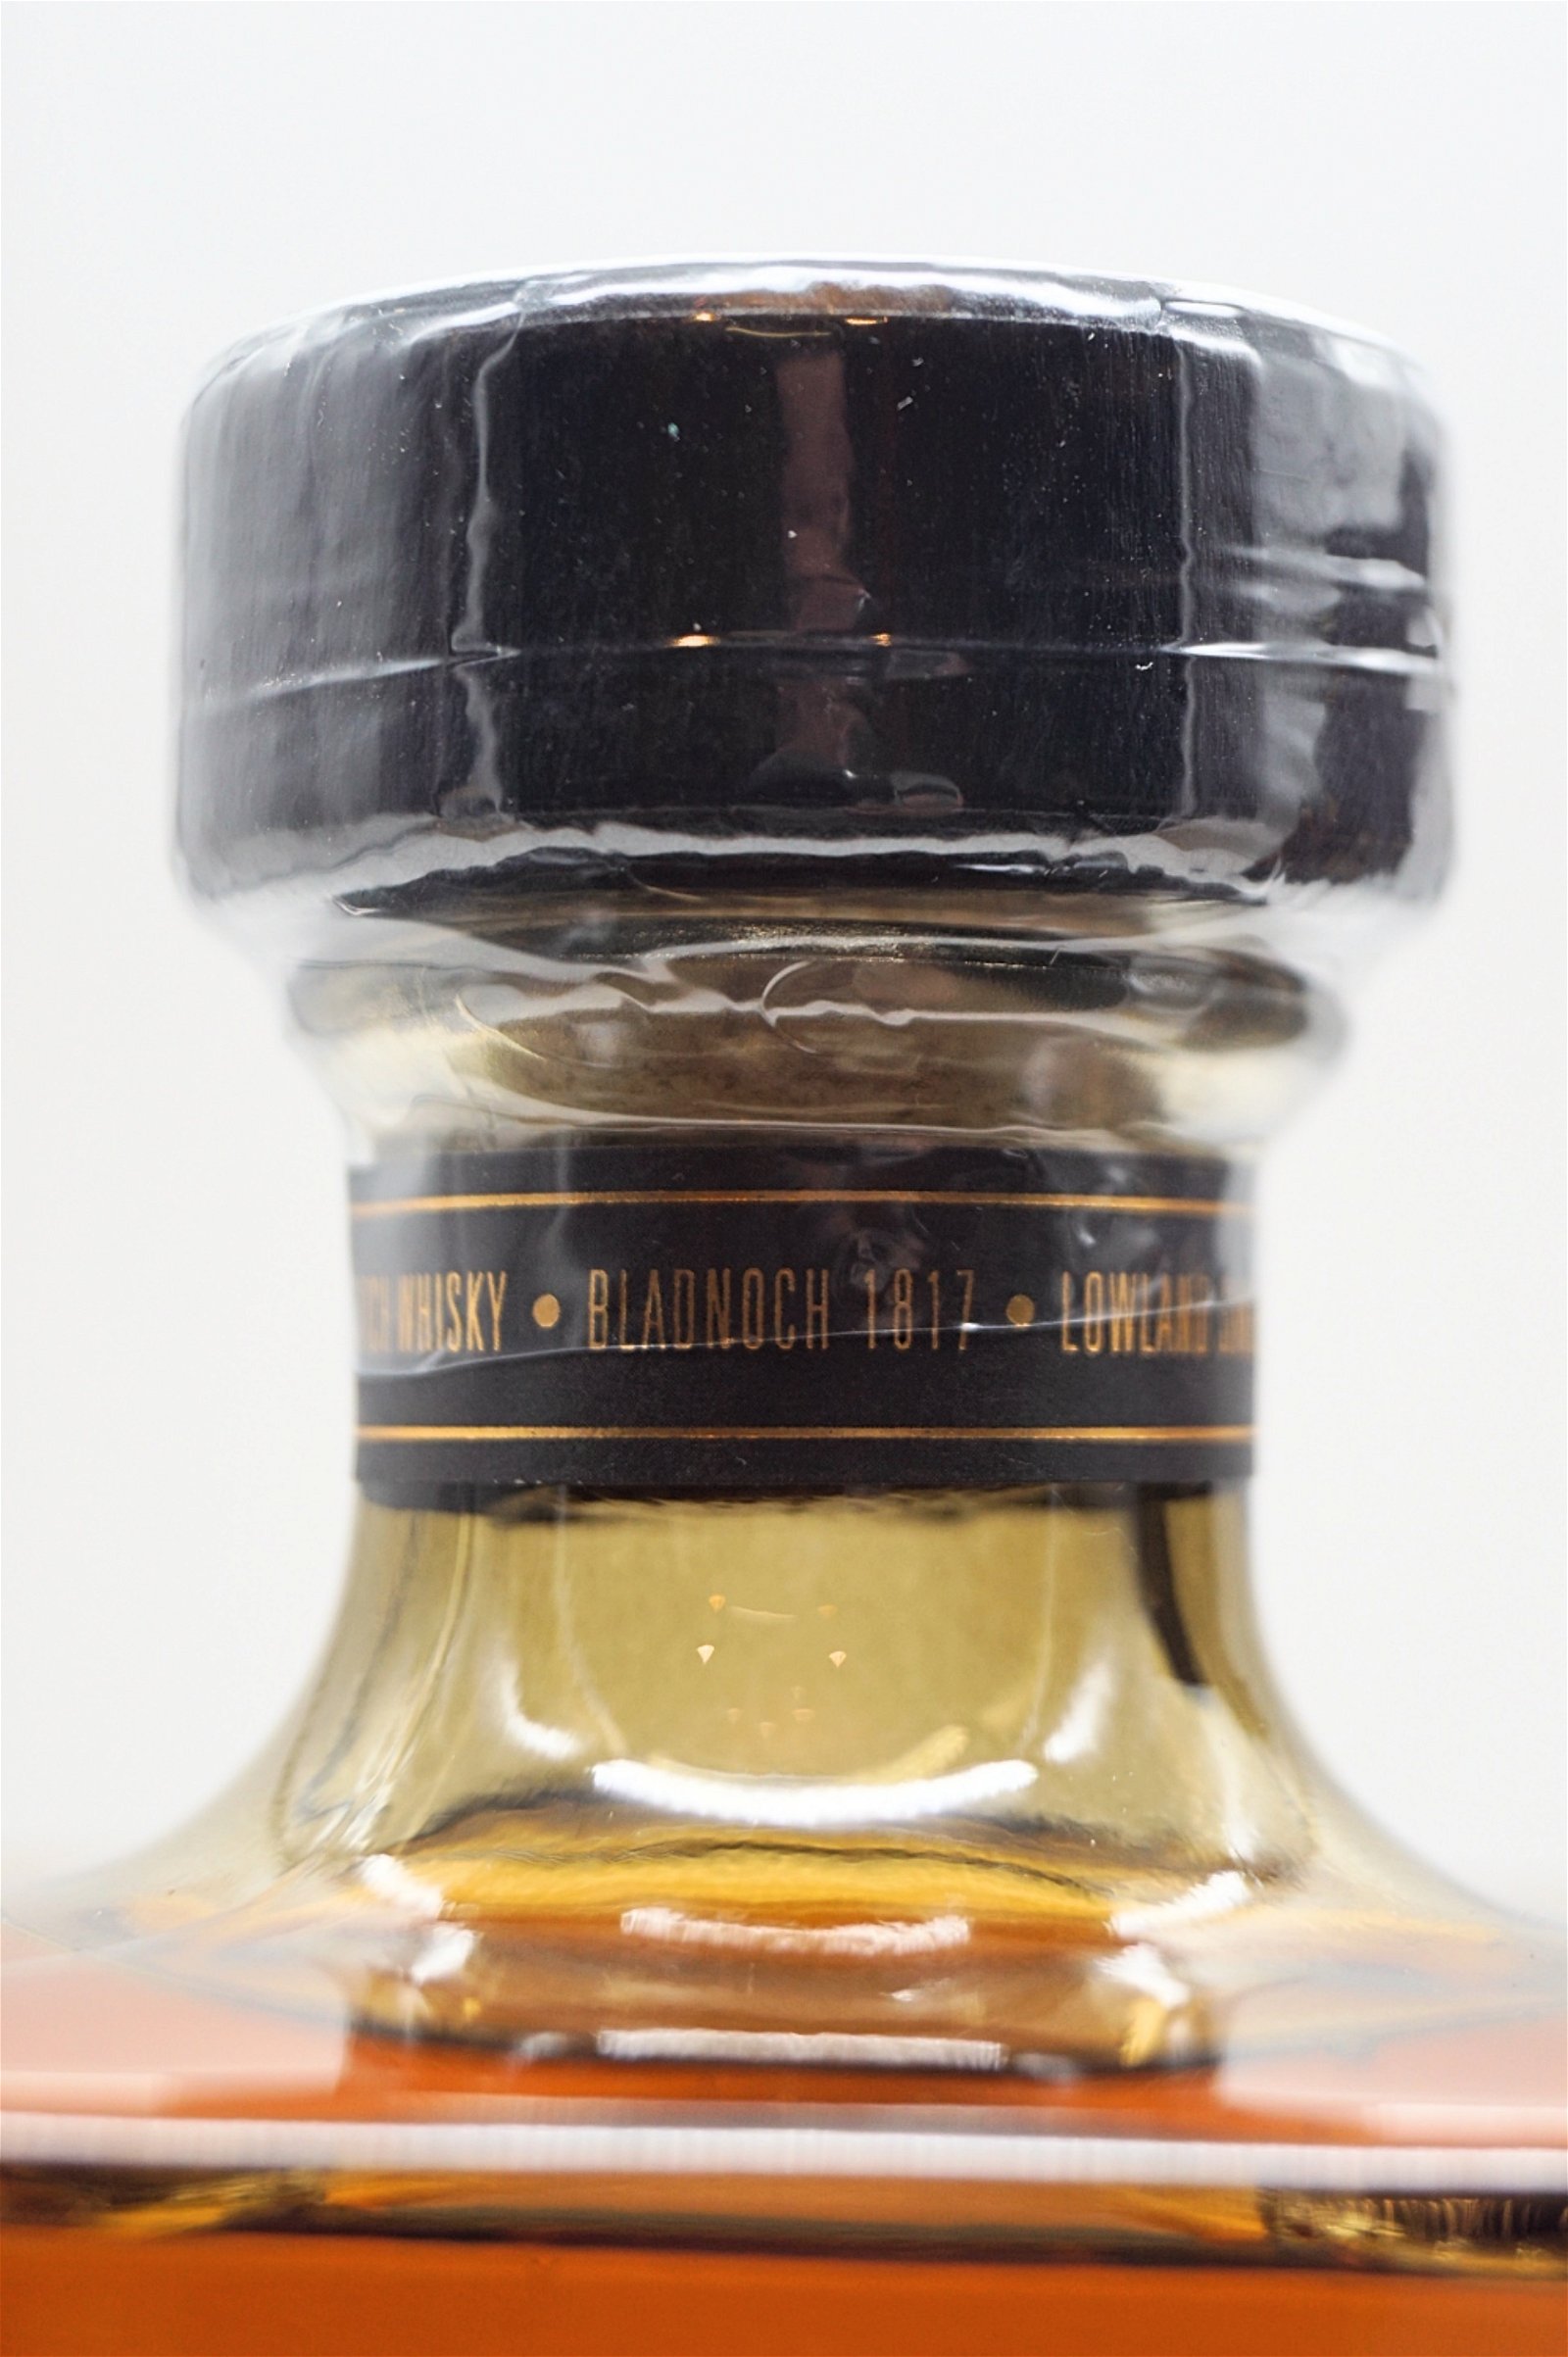 Bladnoch Alinta Lowland Single Malt Scotch Whisky